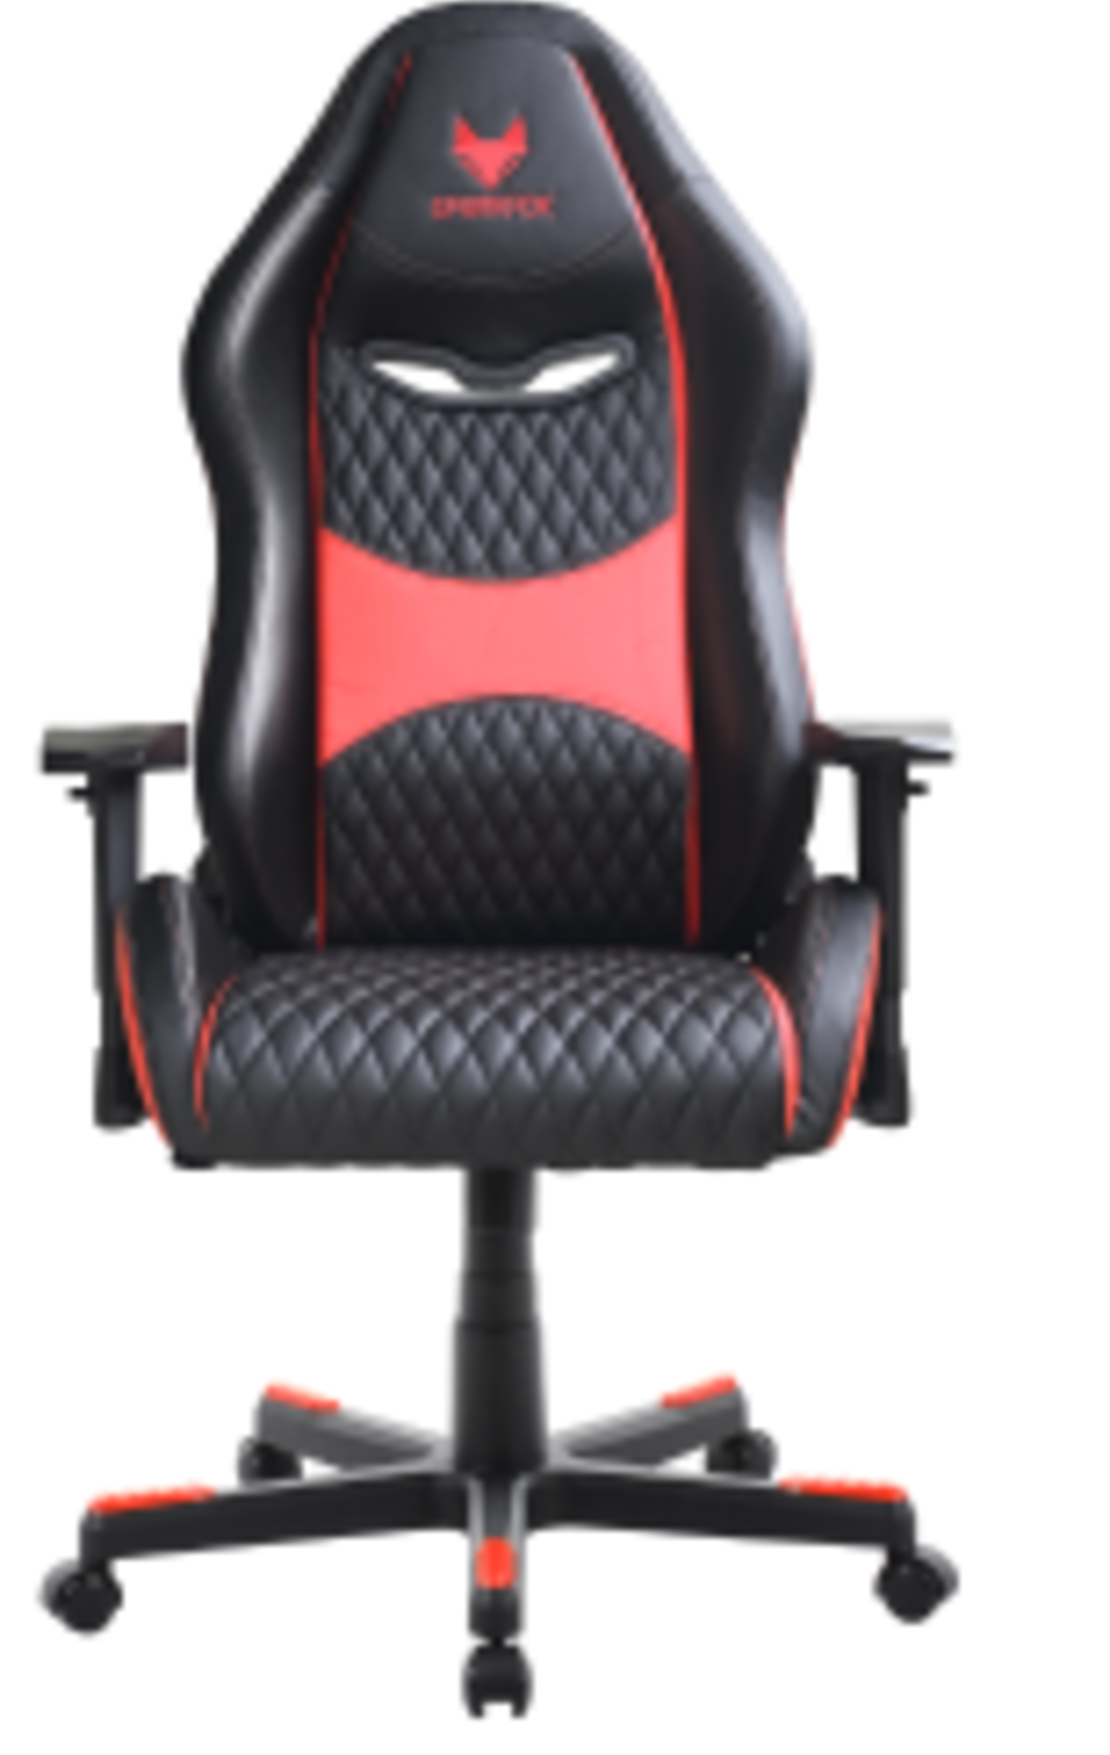 SPARKFOX gaming seat in red rhombus texture